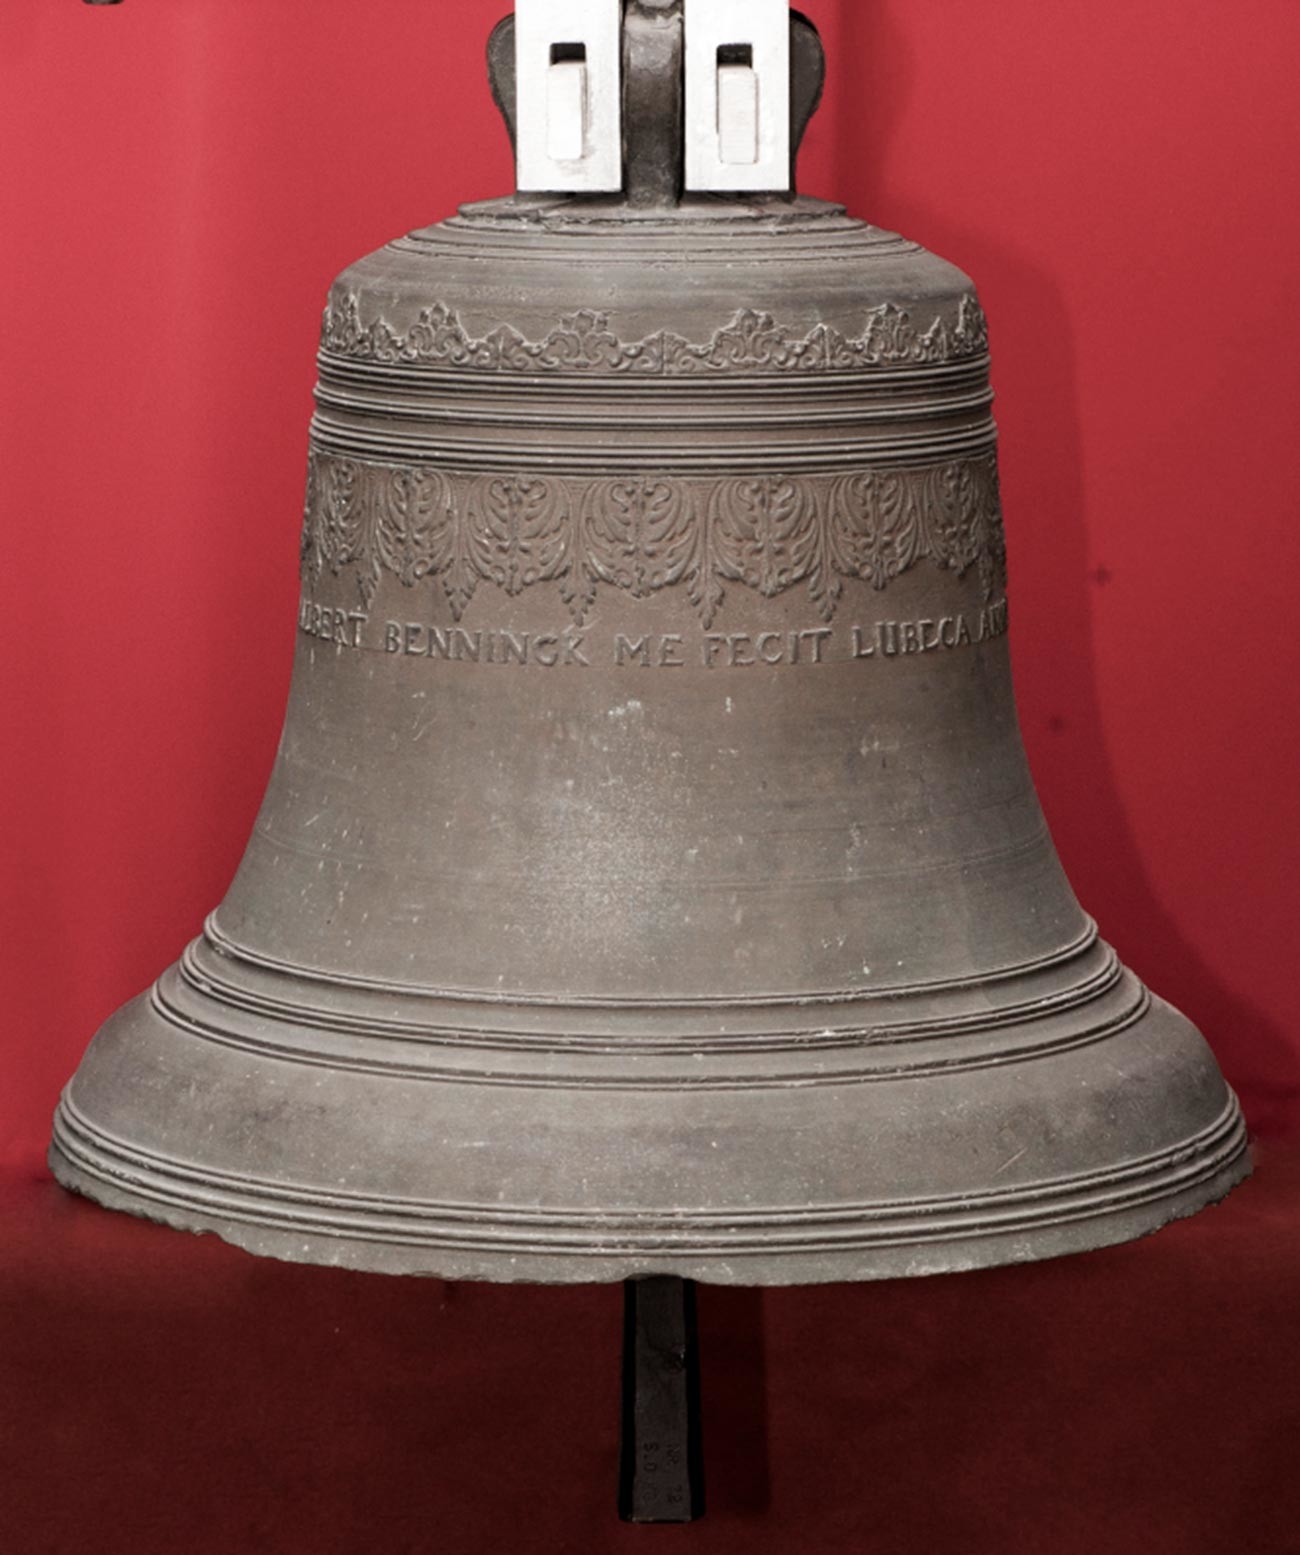 The Benning bell in Staraya Russa local museum